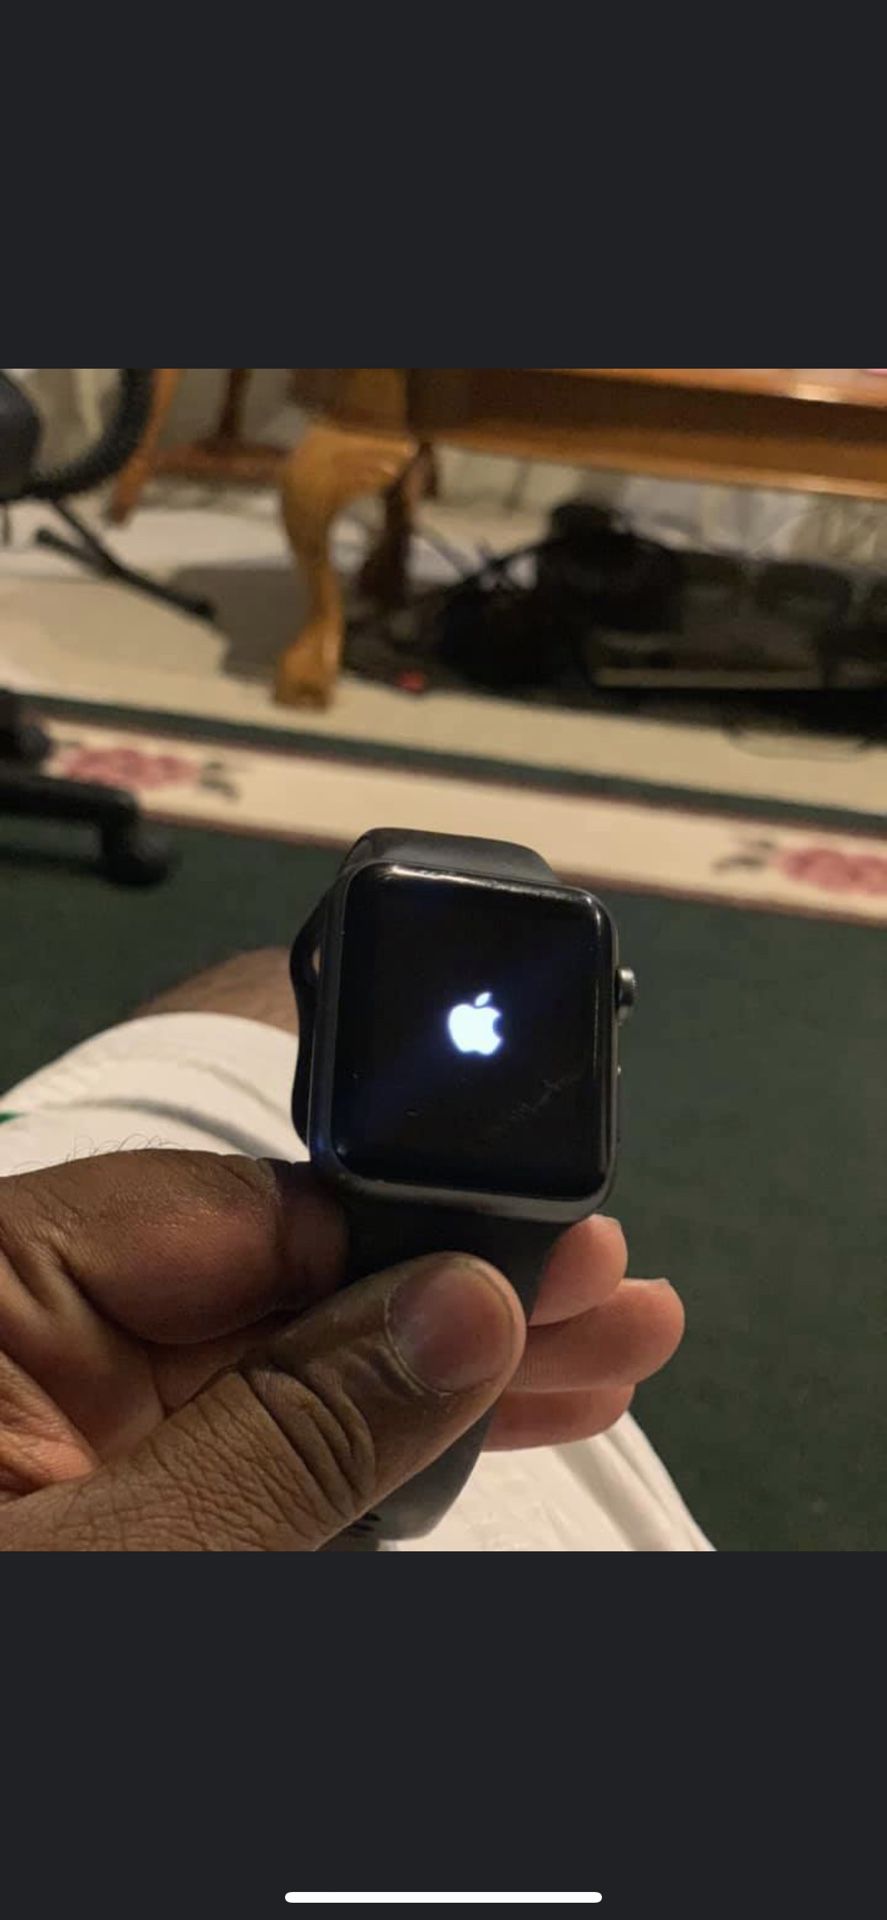 Apple Watch Series 0 First generation Watch Locked